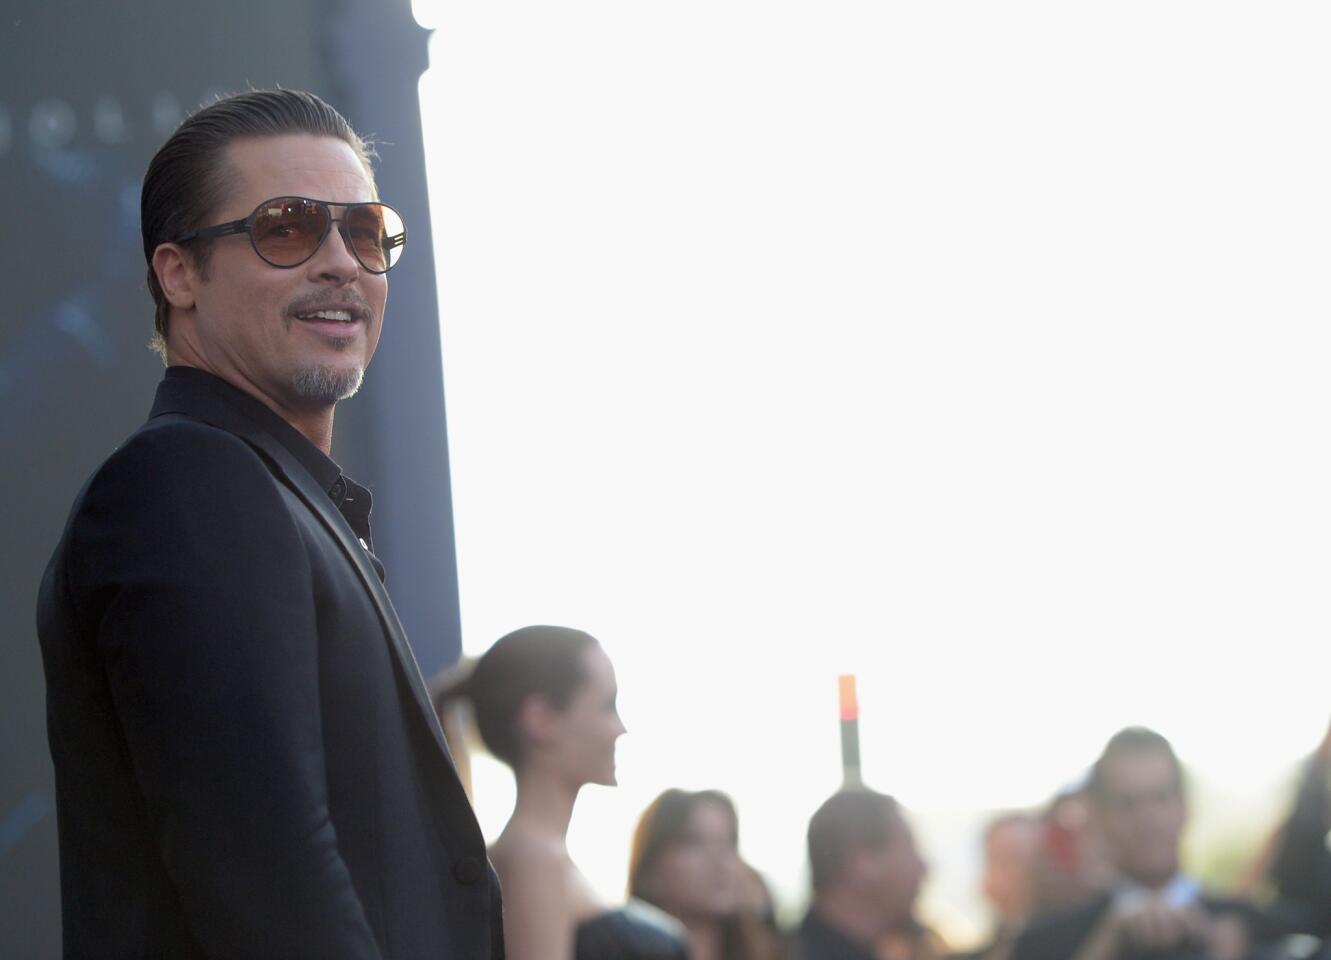 Brad Pitt attacked at 'Maleficent' premiere